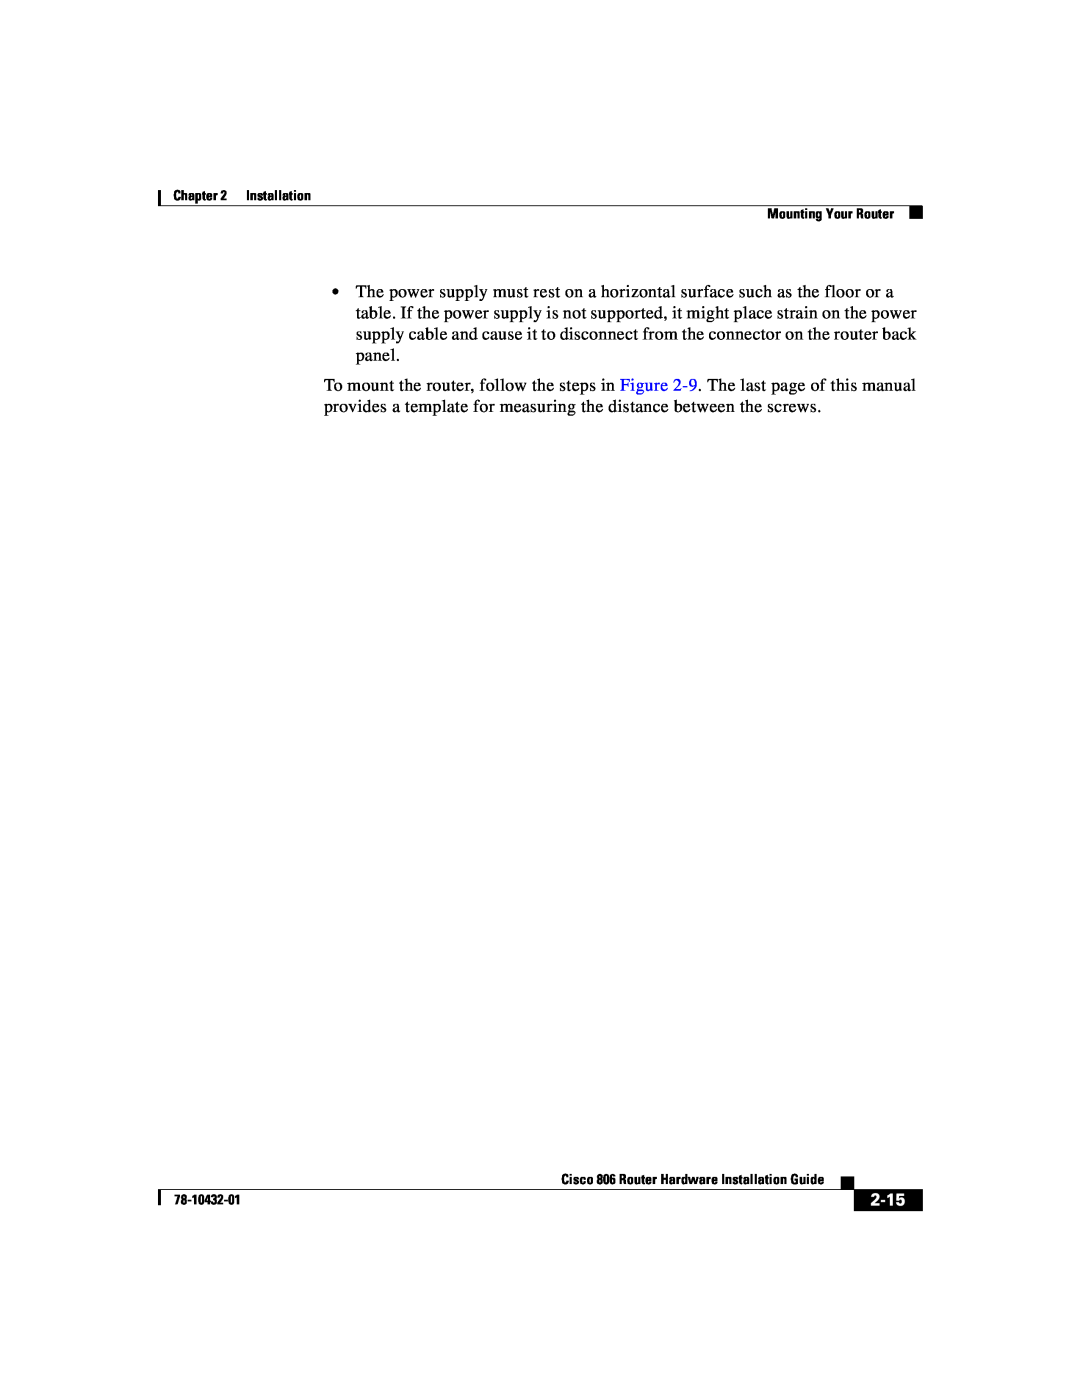 Cisco Systems 806 manual 2-15 